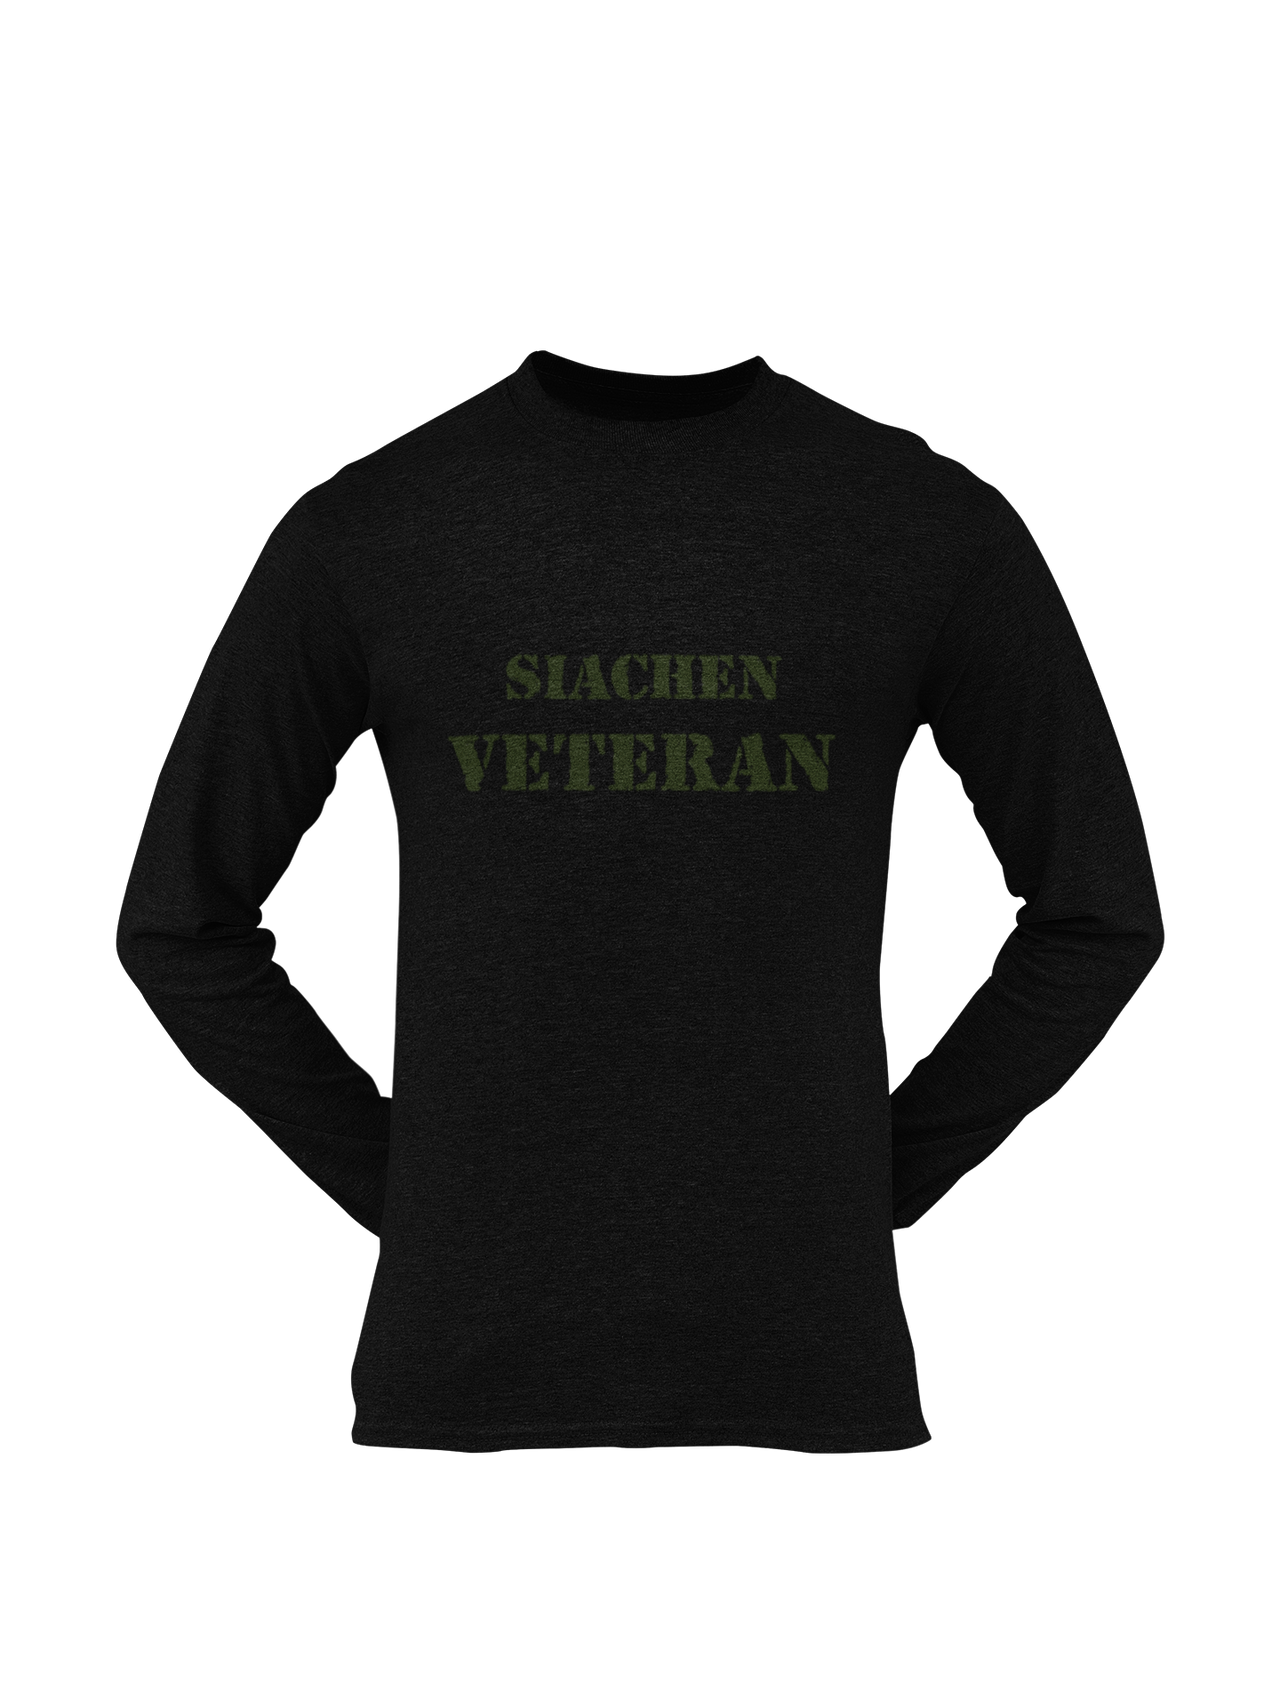 Military T-shirt - Siachen Veteran (Men)